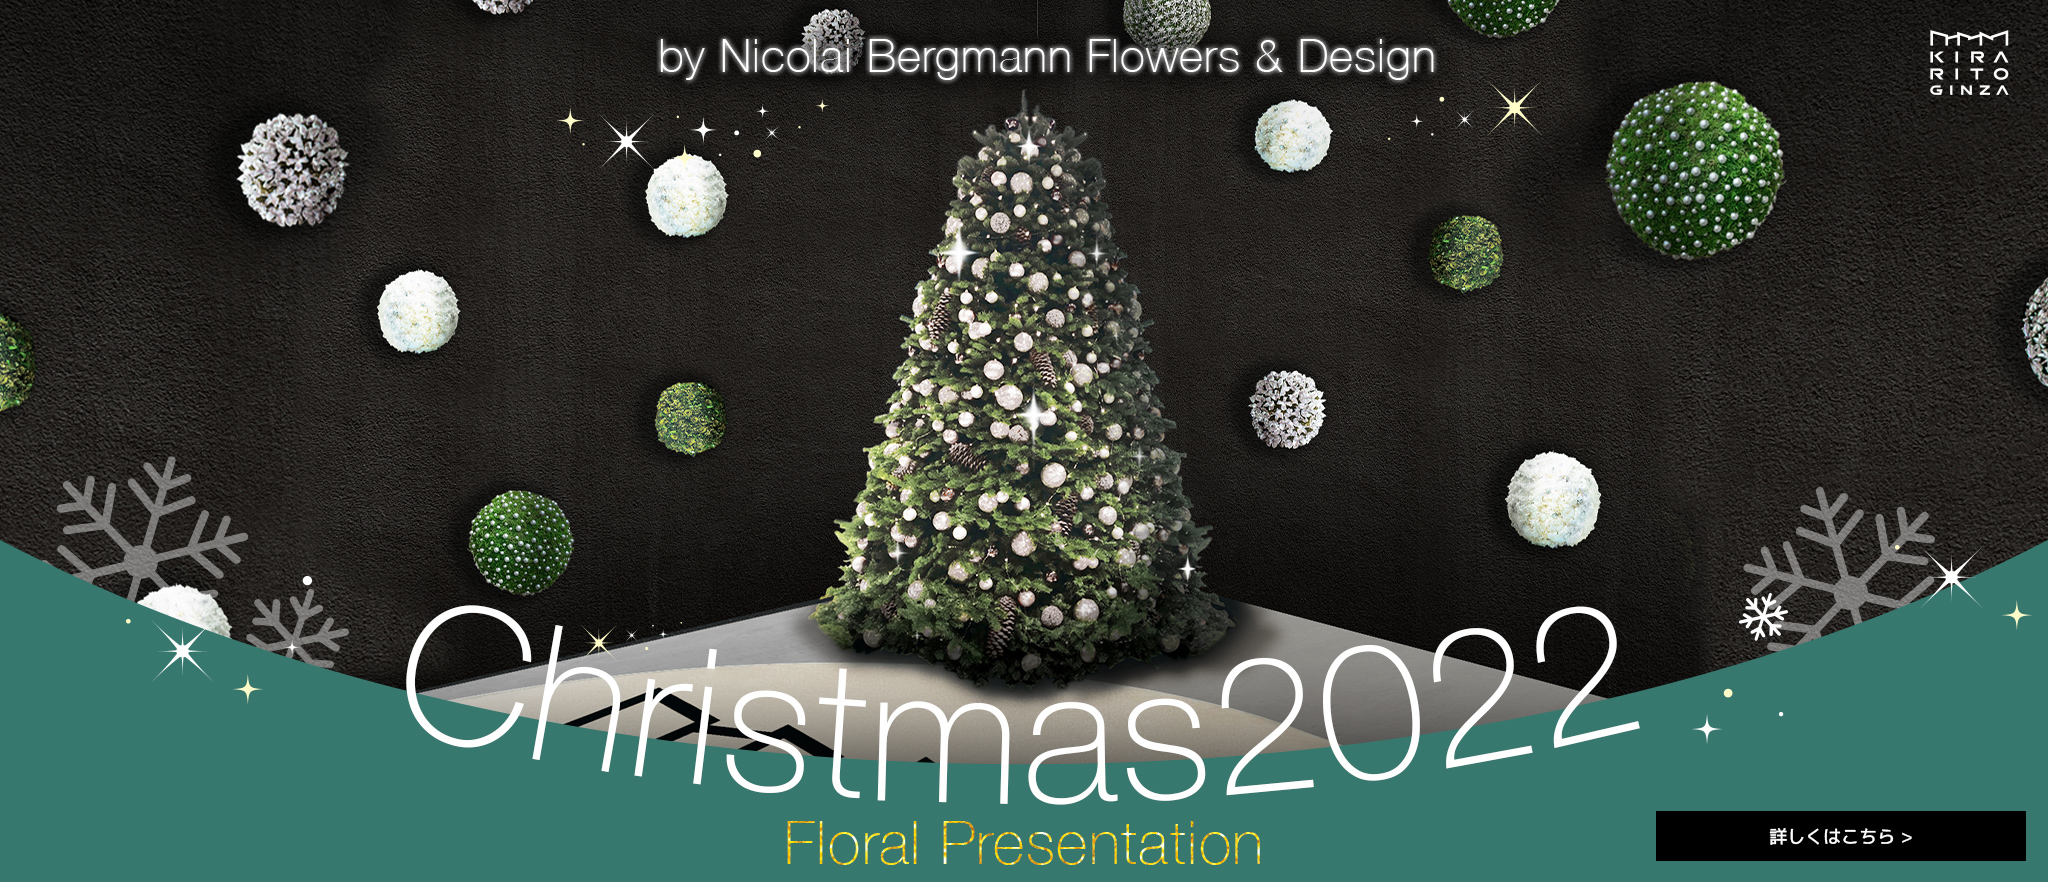 KIRARITOGINZA Christmas 2022 Floral Presentation by Nicolai Bergmann Flowers & Design